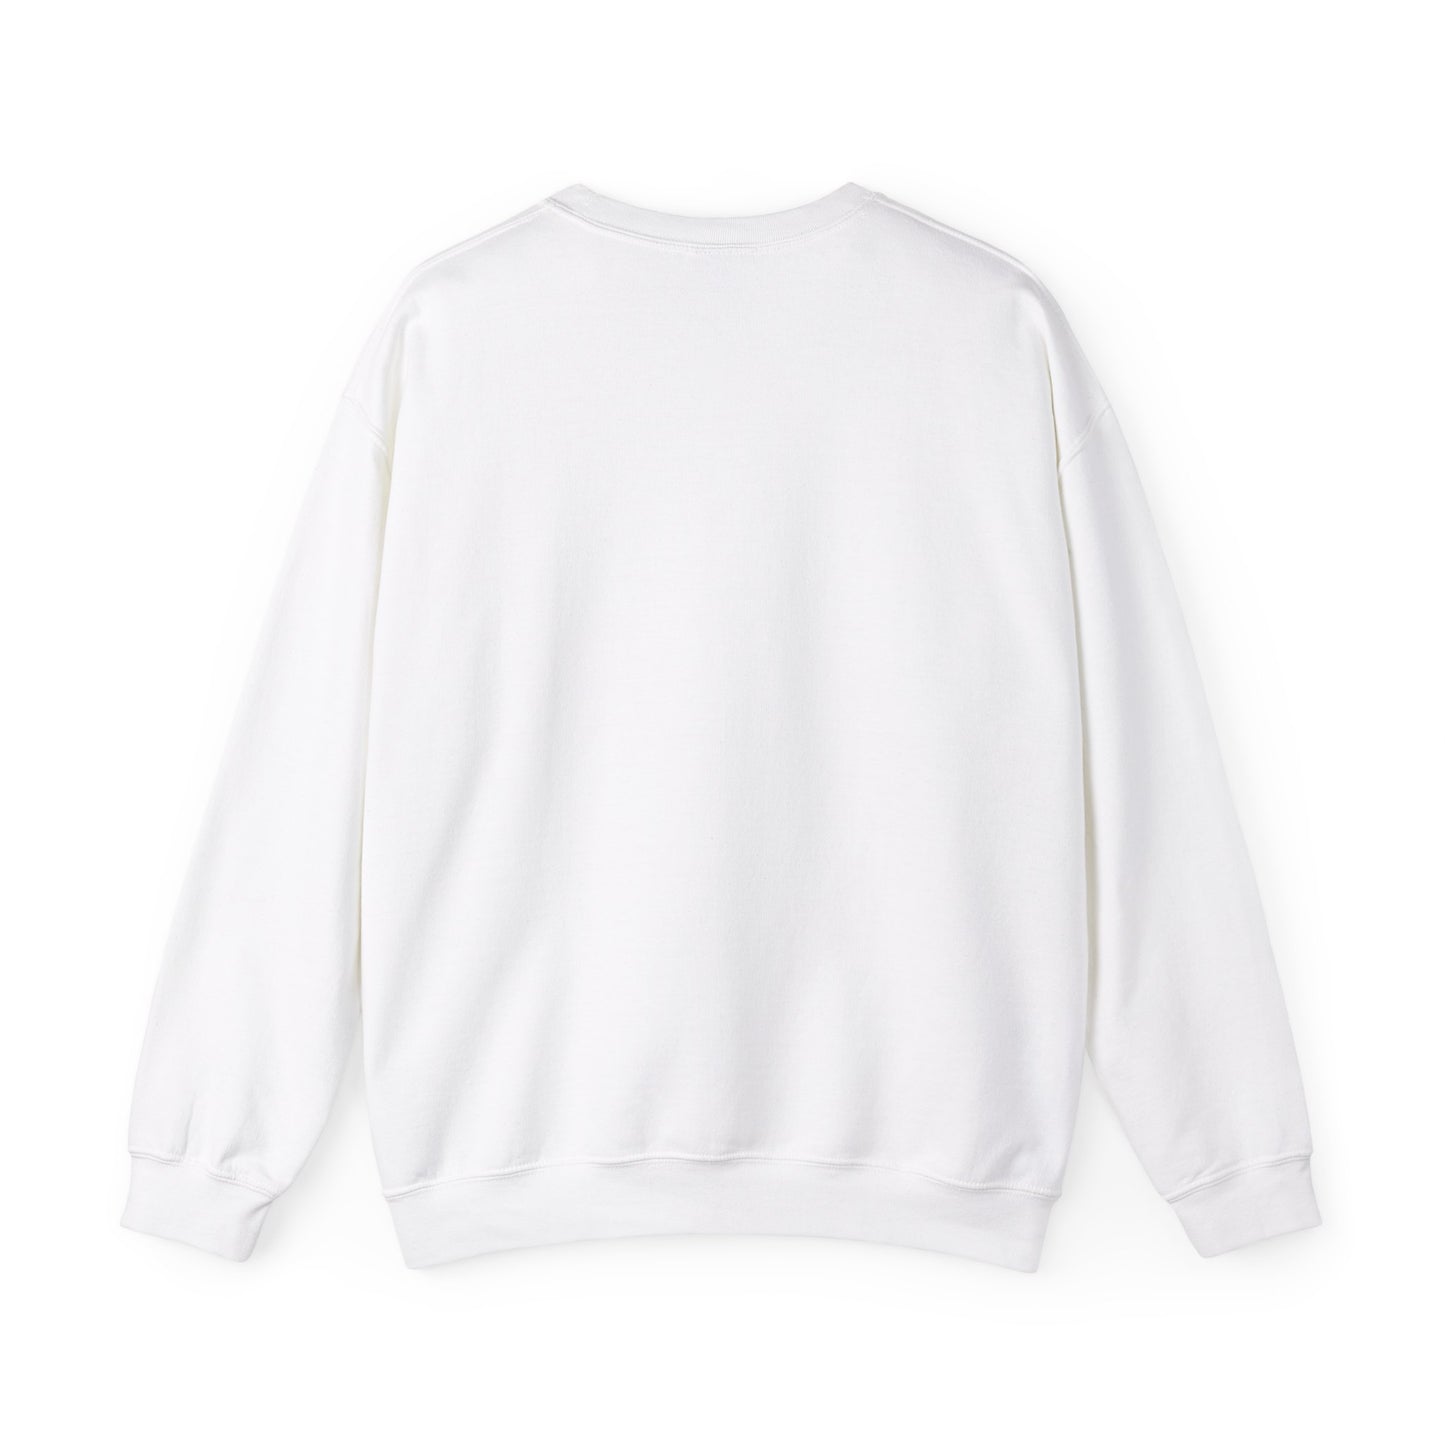 Crewneck sweatshirt -BETTER TOGETHER- for adults